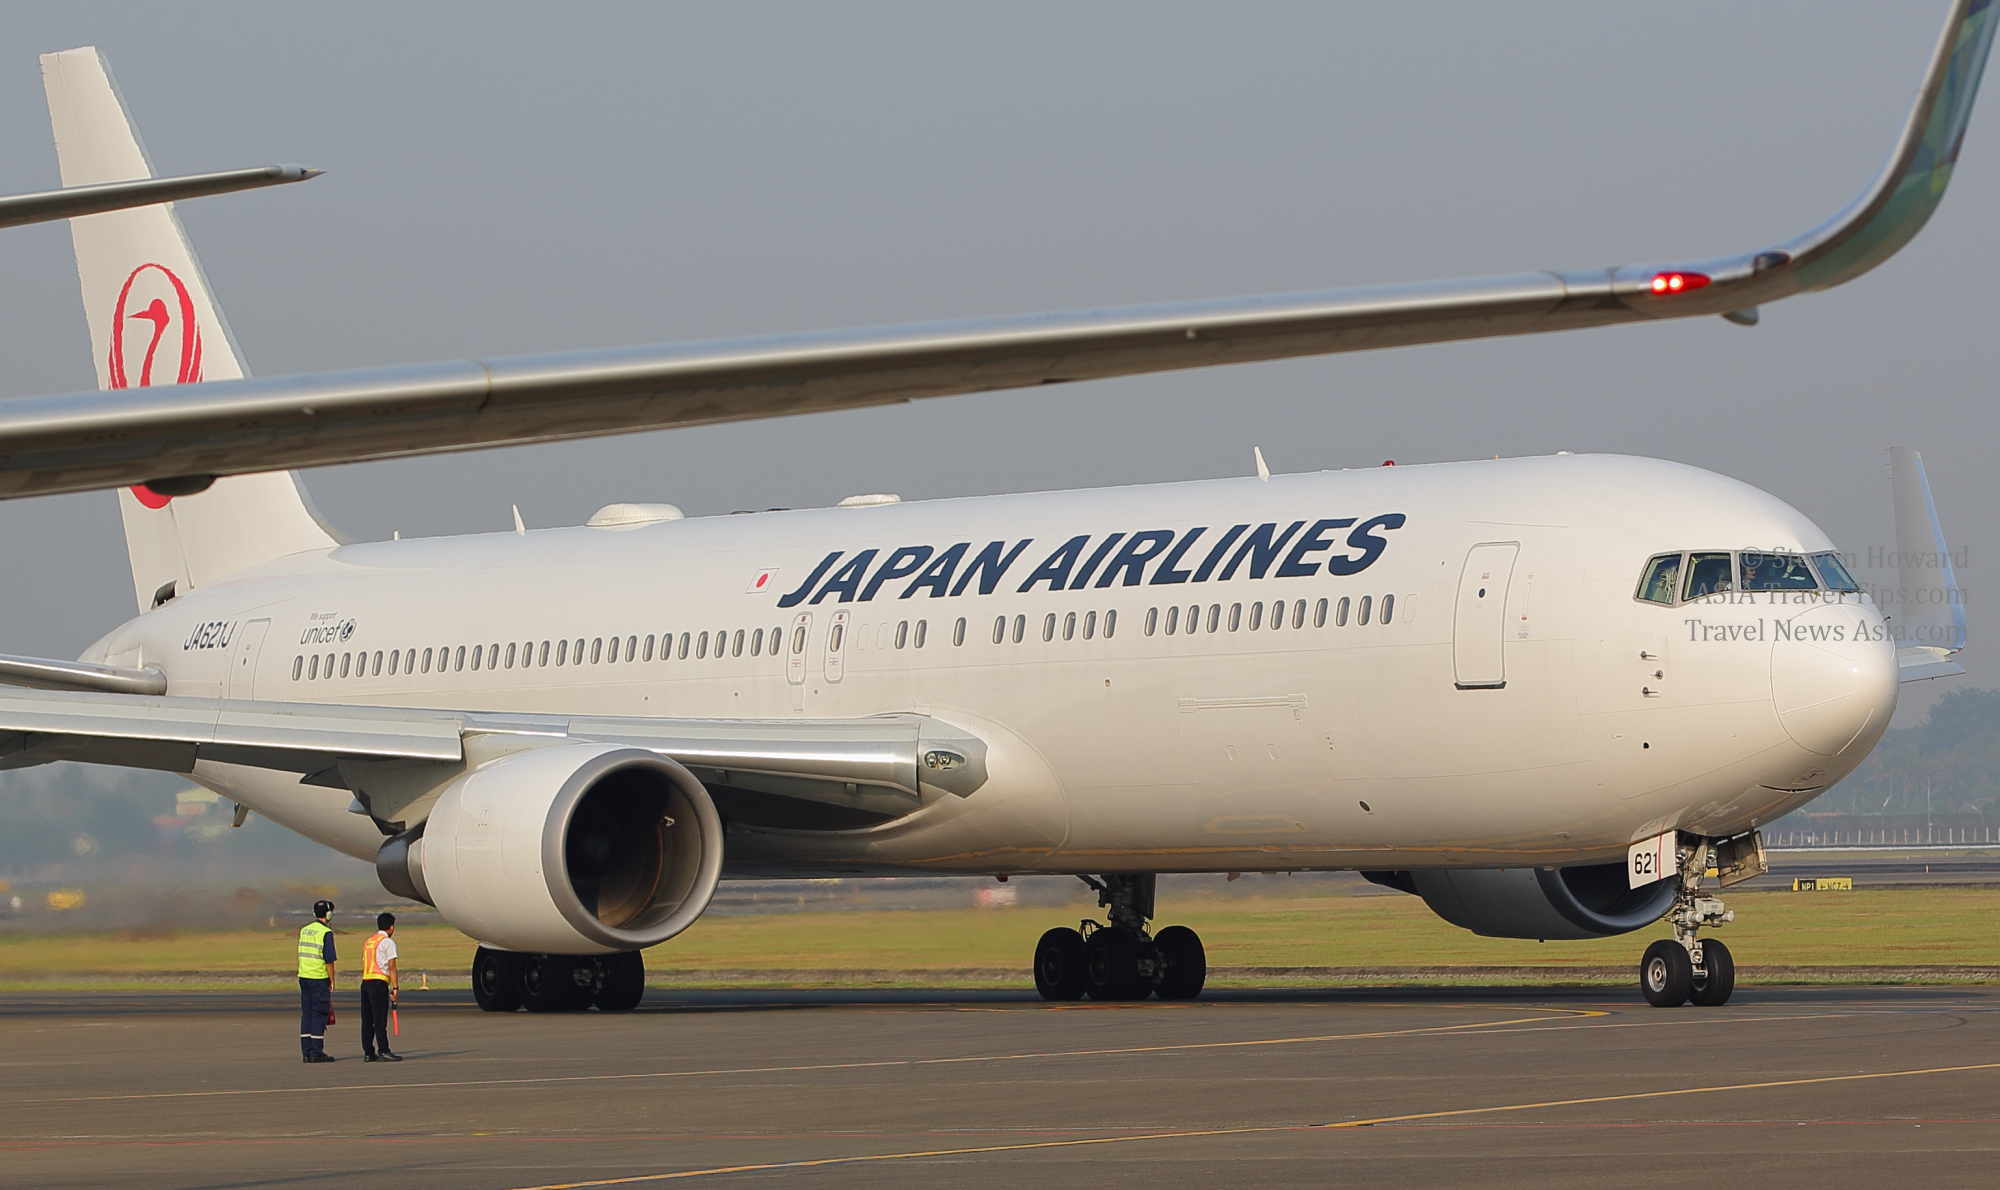 Japan Airlines (JAL) Boeing 767 aircraft registration JA621J. Picture taken by Steven Howard of TravelNewsAsia.com Click to enlarge.